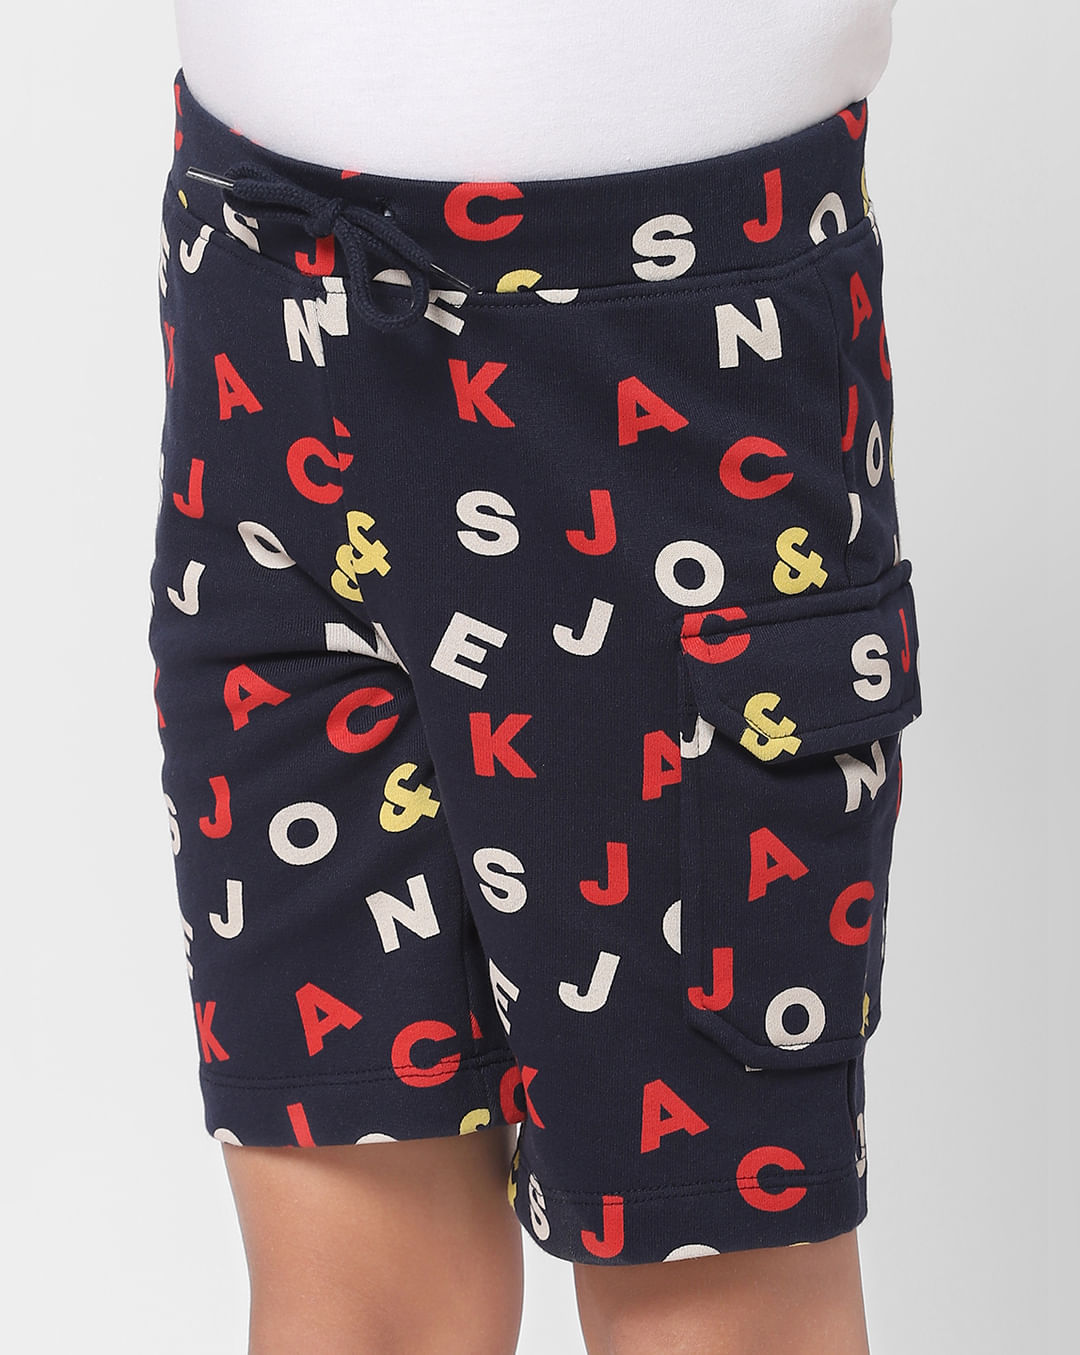 Buy Blue Printed Shorts for Boys Online at Jack&Jones Junior